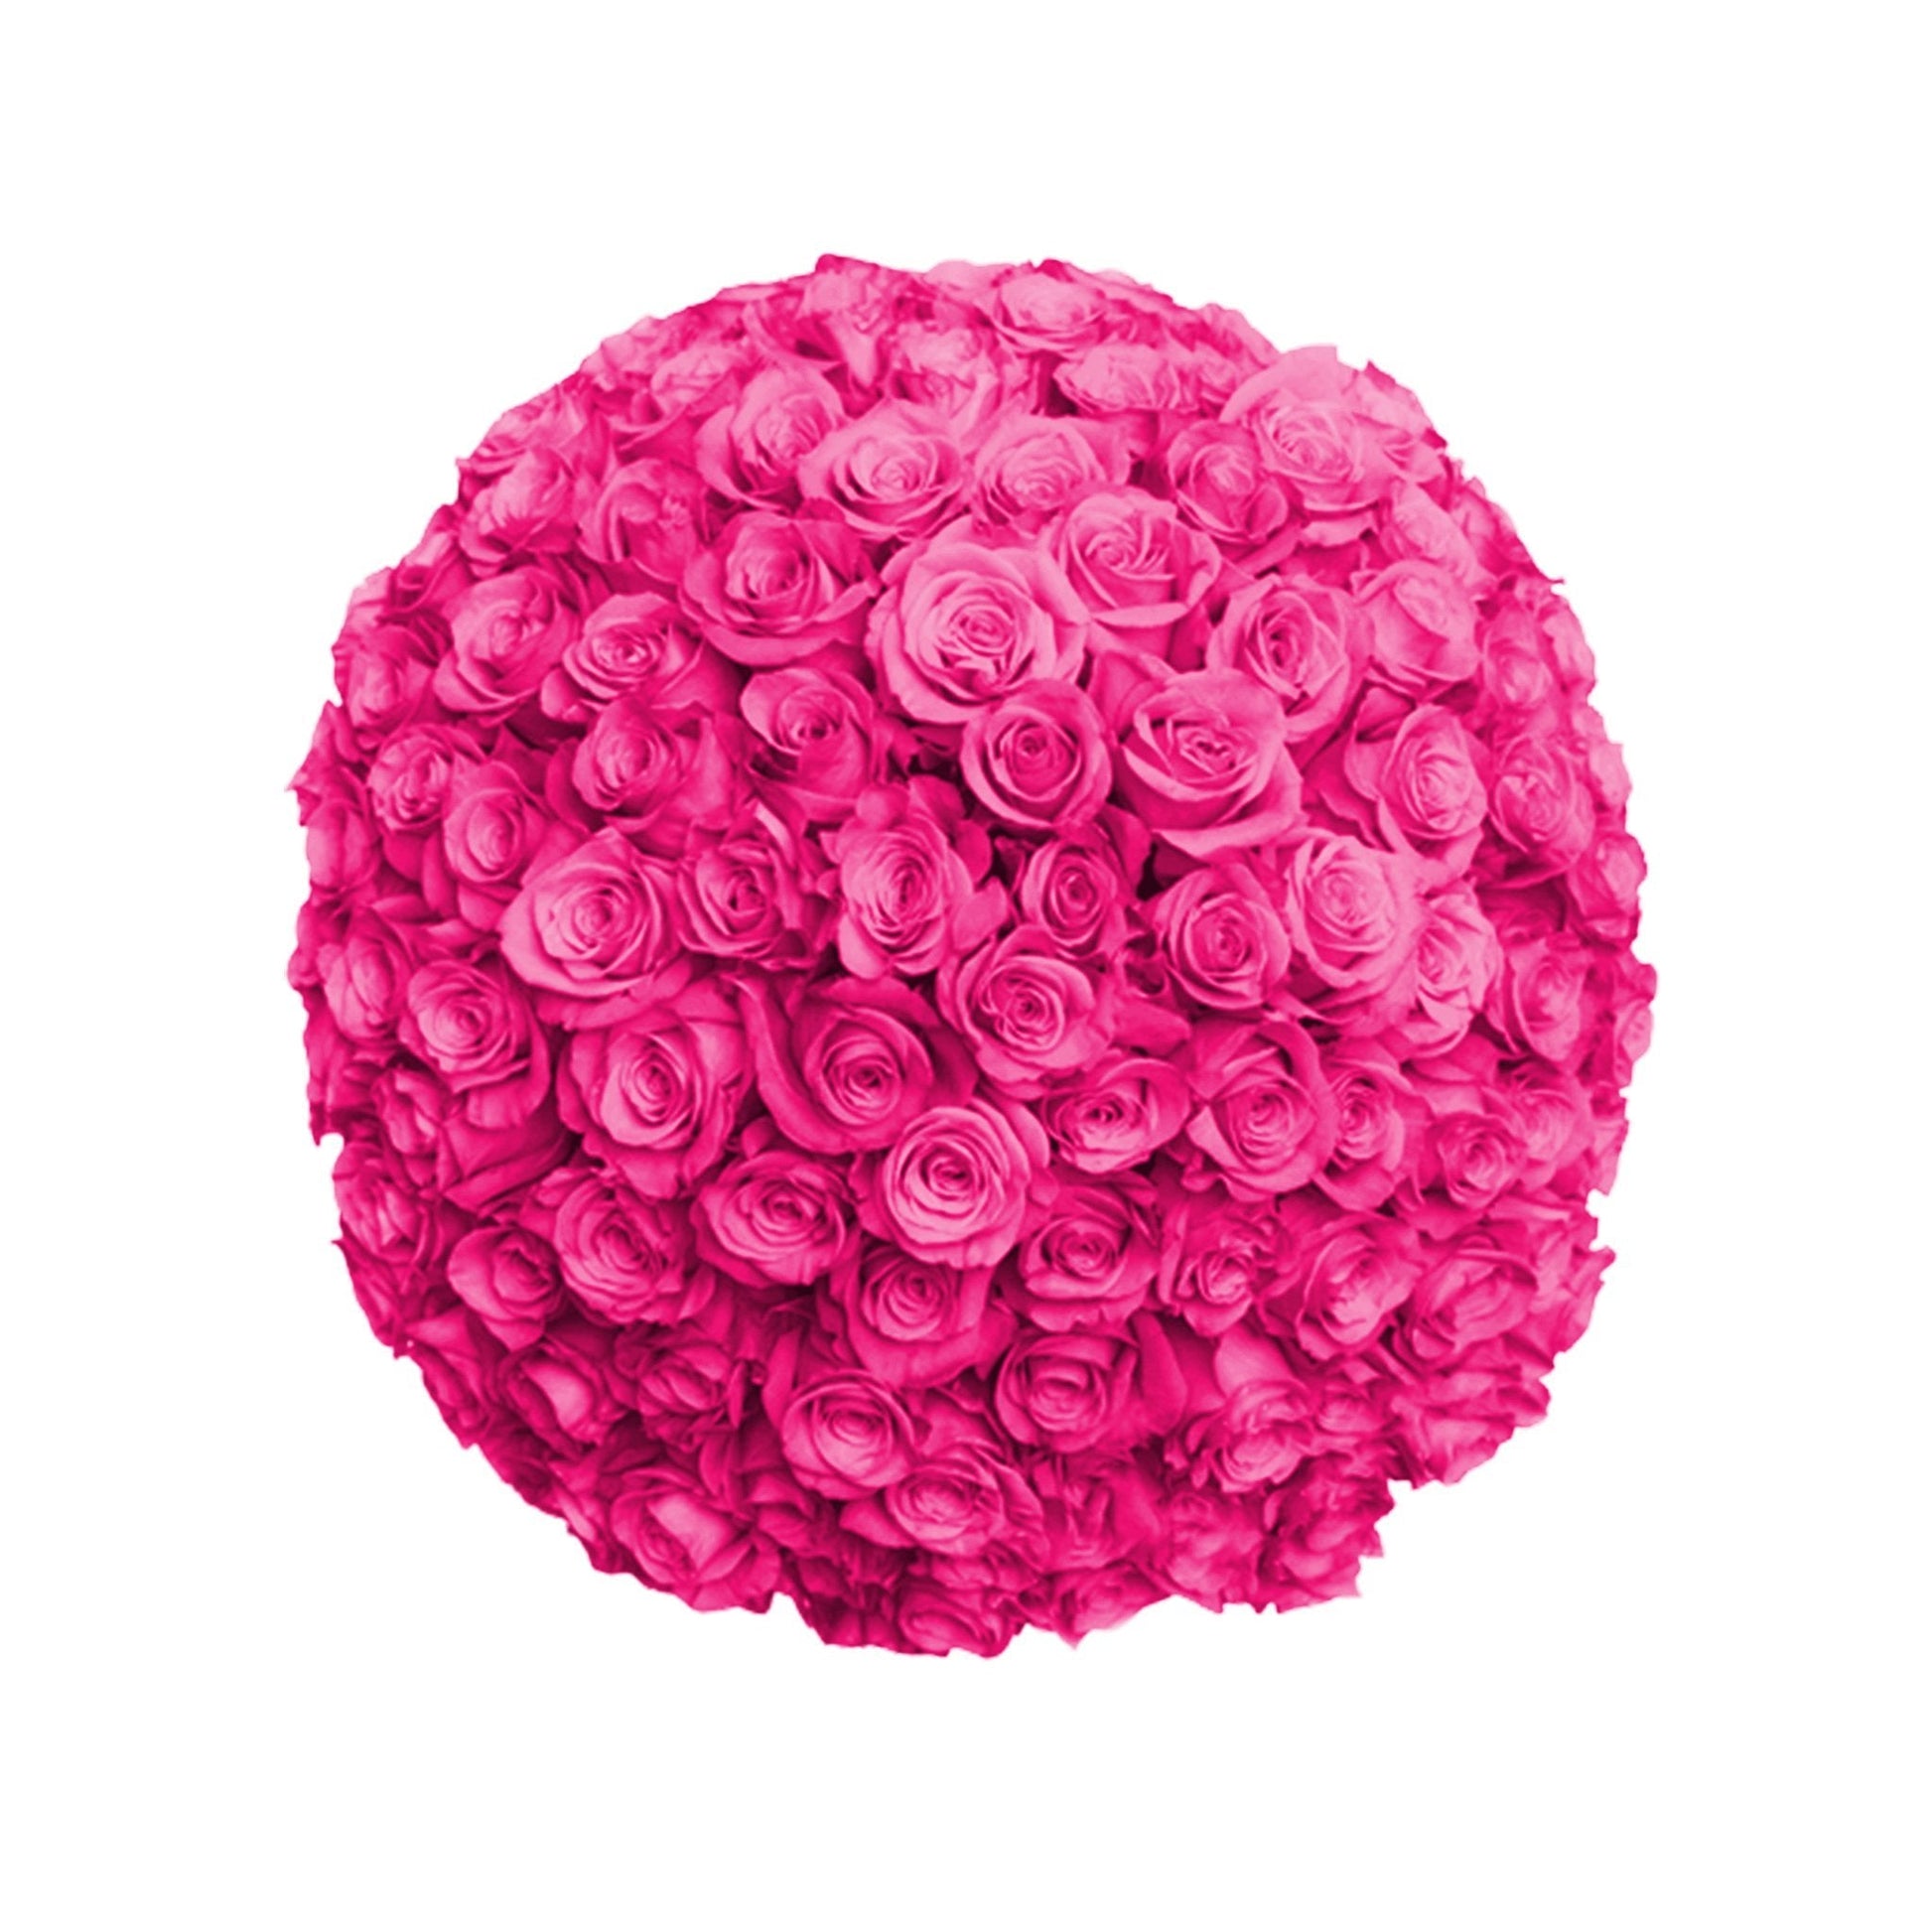 Fresh Roses in a Vase | 100 Hot Pink Roses - Floral Arrangement - Flower Delivery Brooklyn